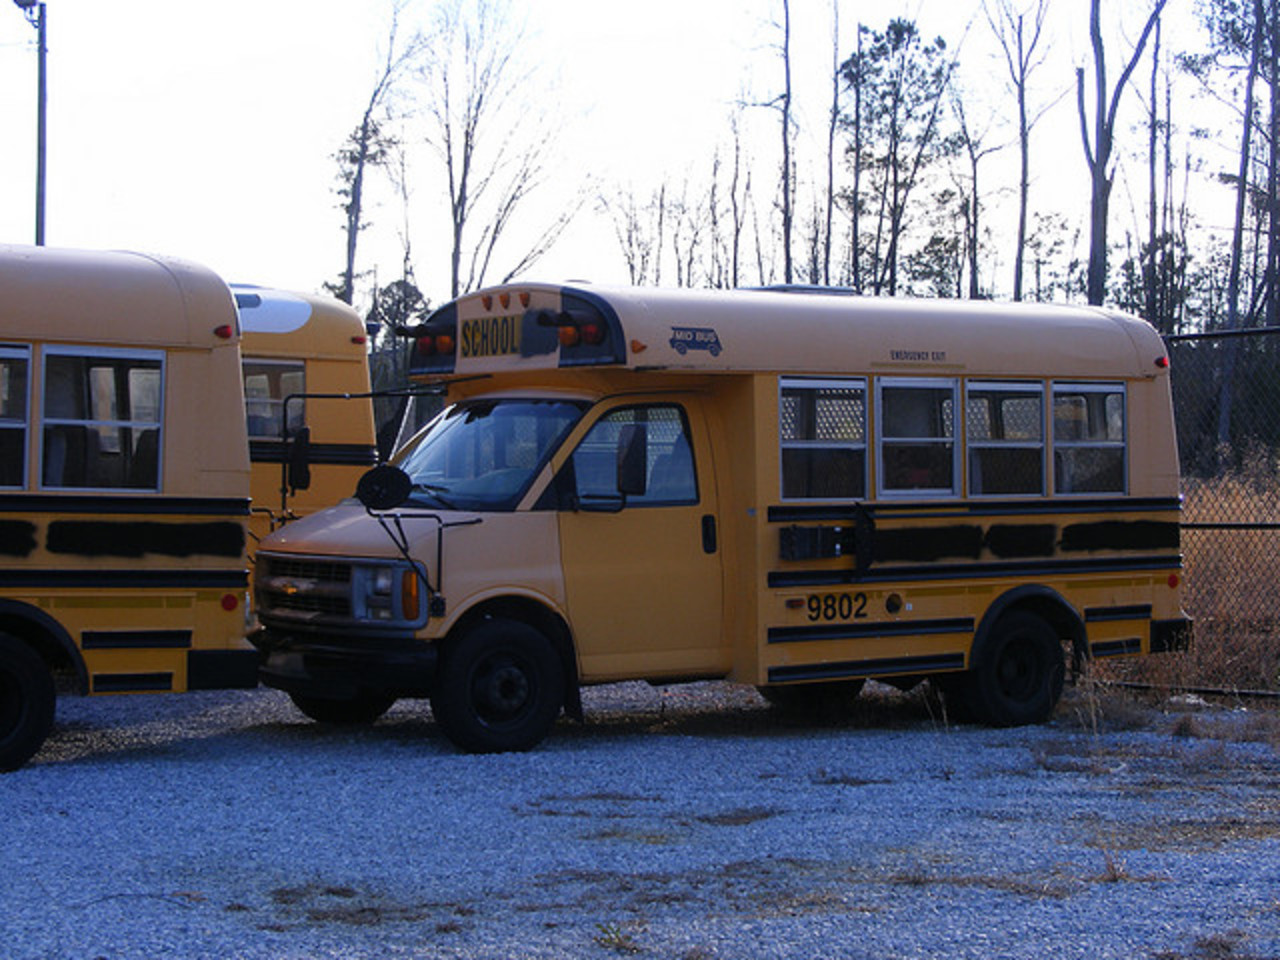 Flickr: The School Bus Group Pool